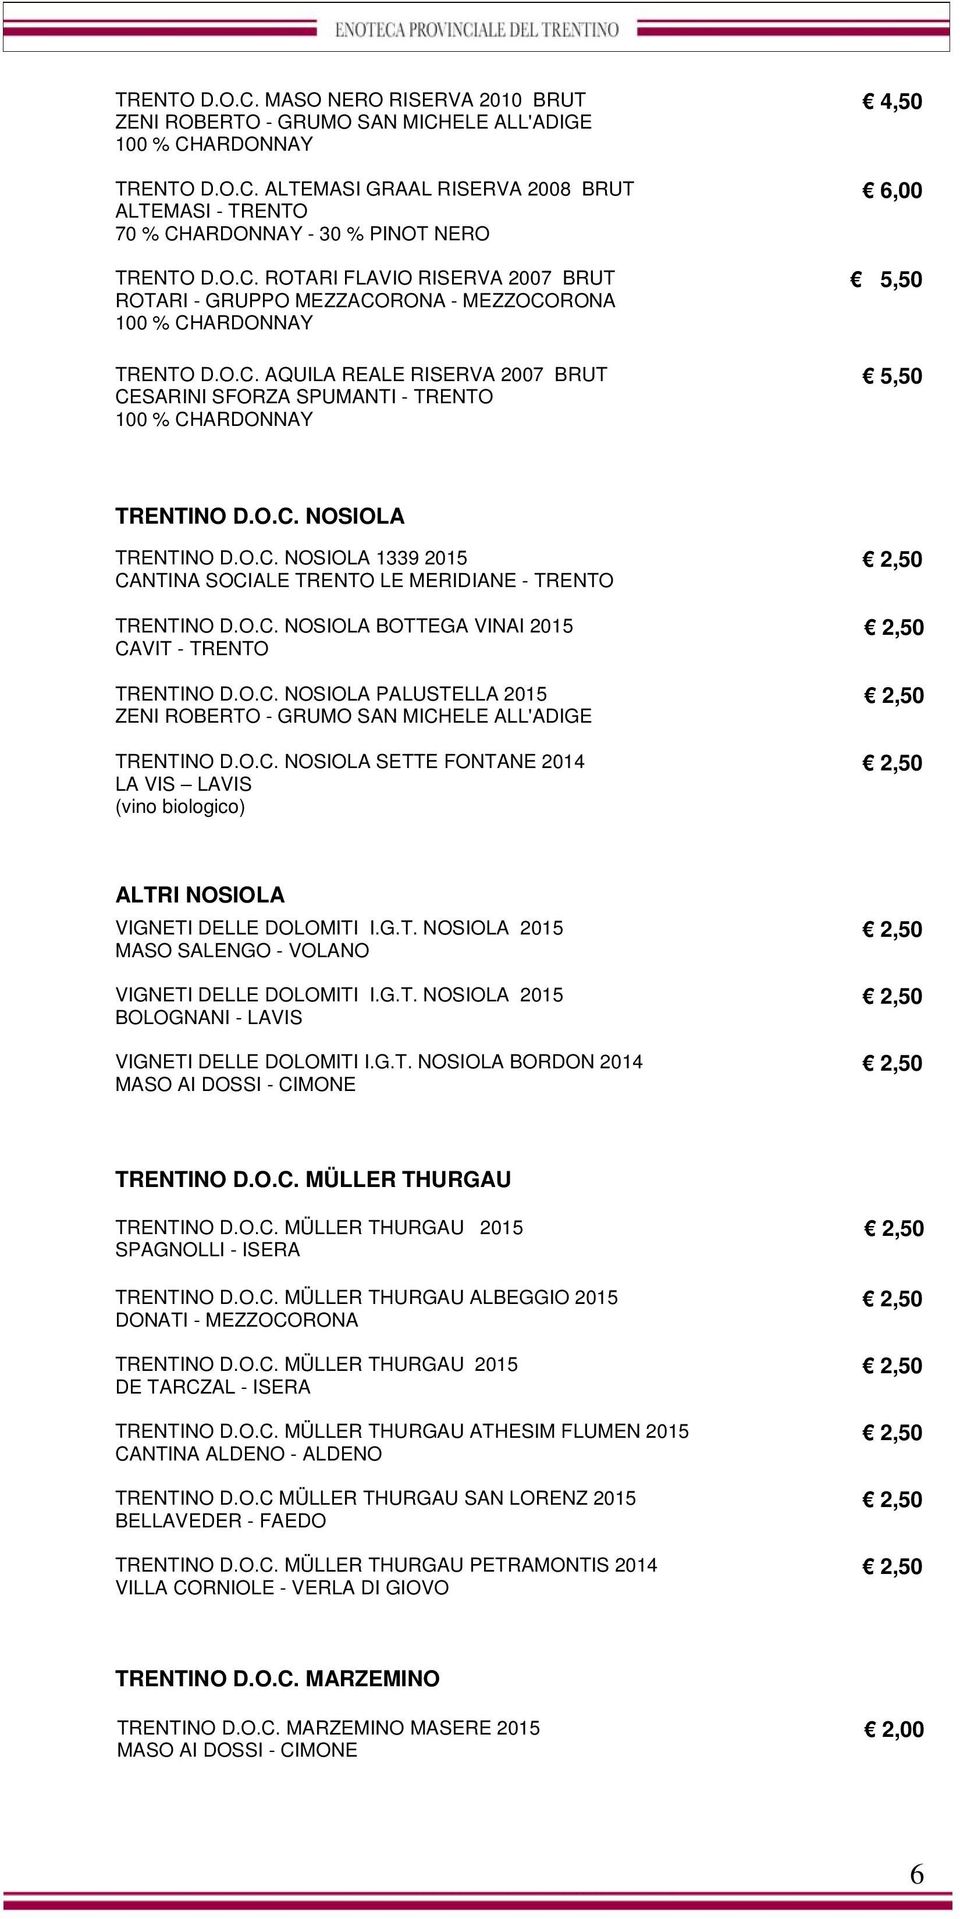 O.C. NOSIOLA BOTTEGA VINAI 2015 CAVIT - TRENTO TRENTINO D.O.C. NOSIOLA PALUSTELLA 2015 ZENI ROBERTO - GRUMO SAN MICHELE ALL'ADIGE TRENTINO D.O.C. NOSIOLA SETTE FONTANE 2014 LA VIS LAVIS (vino biologico) ALTRI NOSIOLA VIGNETI DELLE DOLOMITI I.